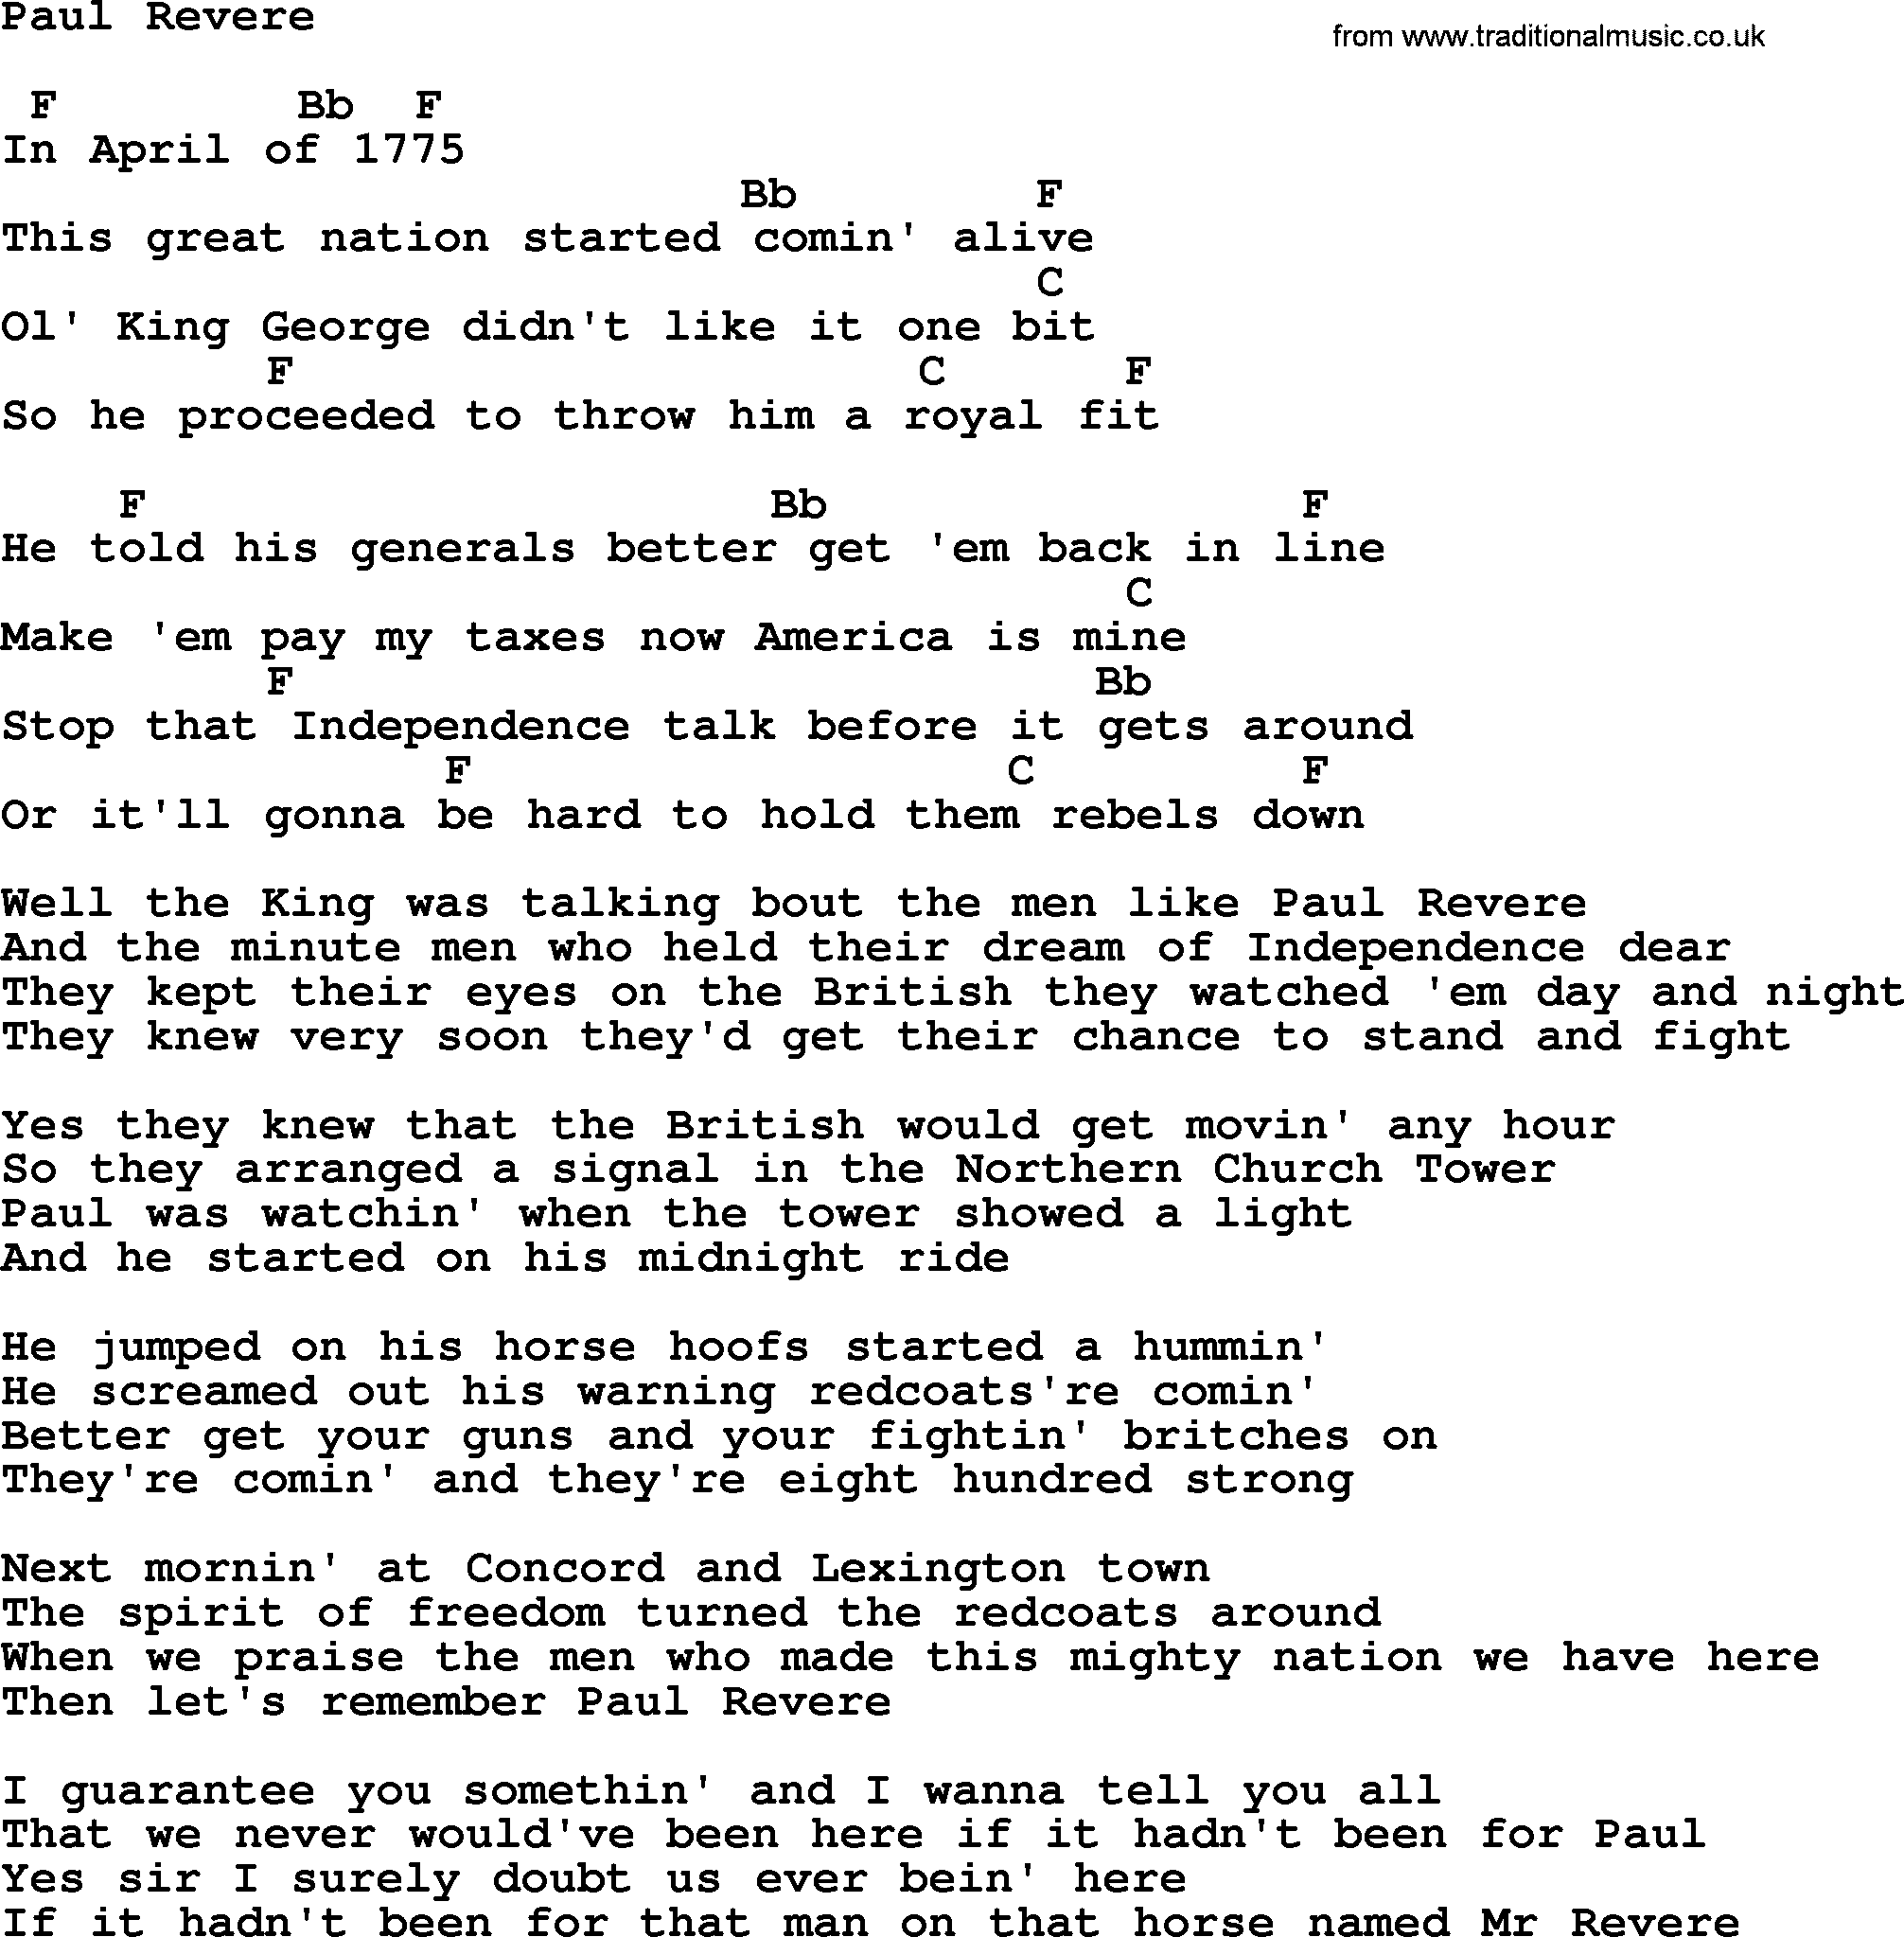 Johnny Cash song Paul Revere, lyrics and chords